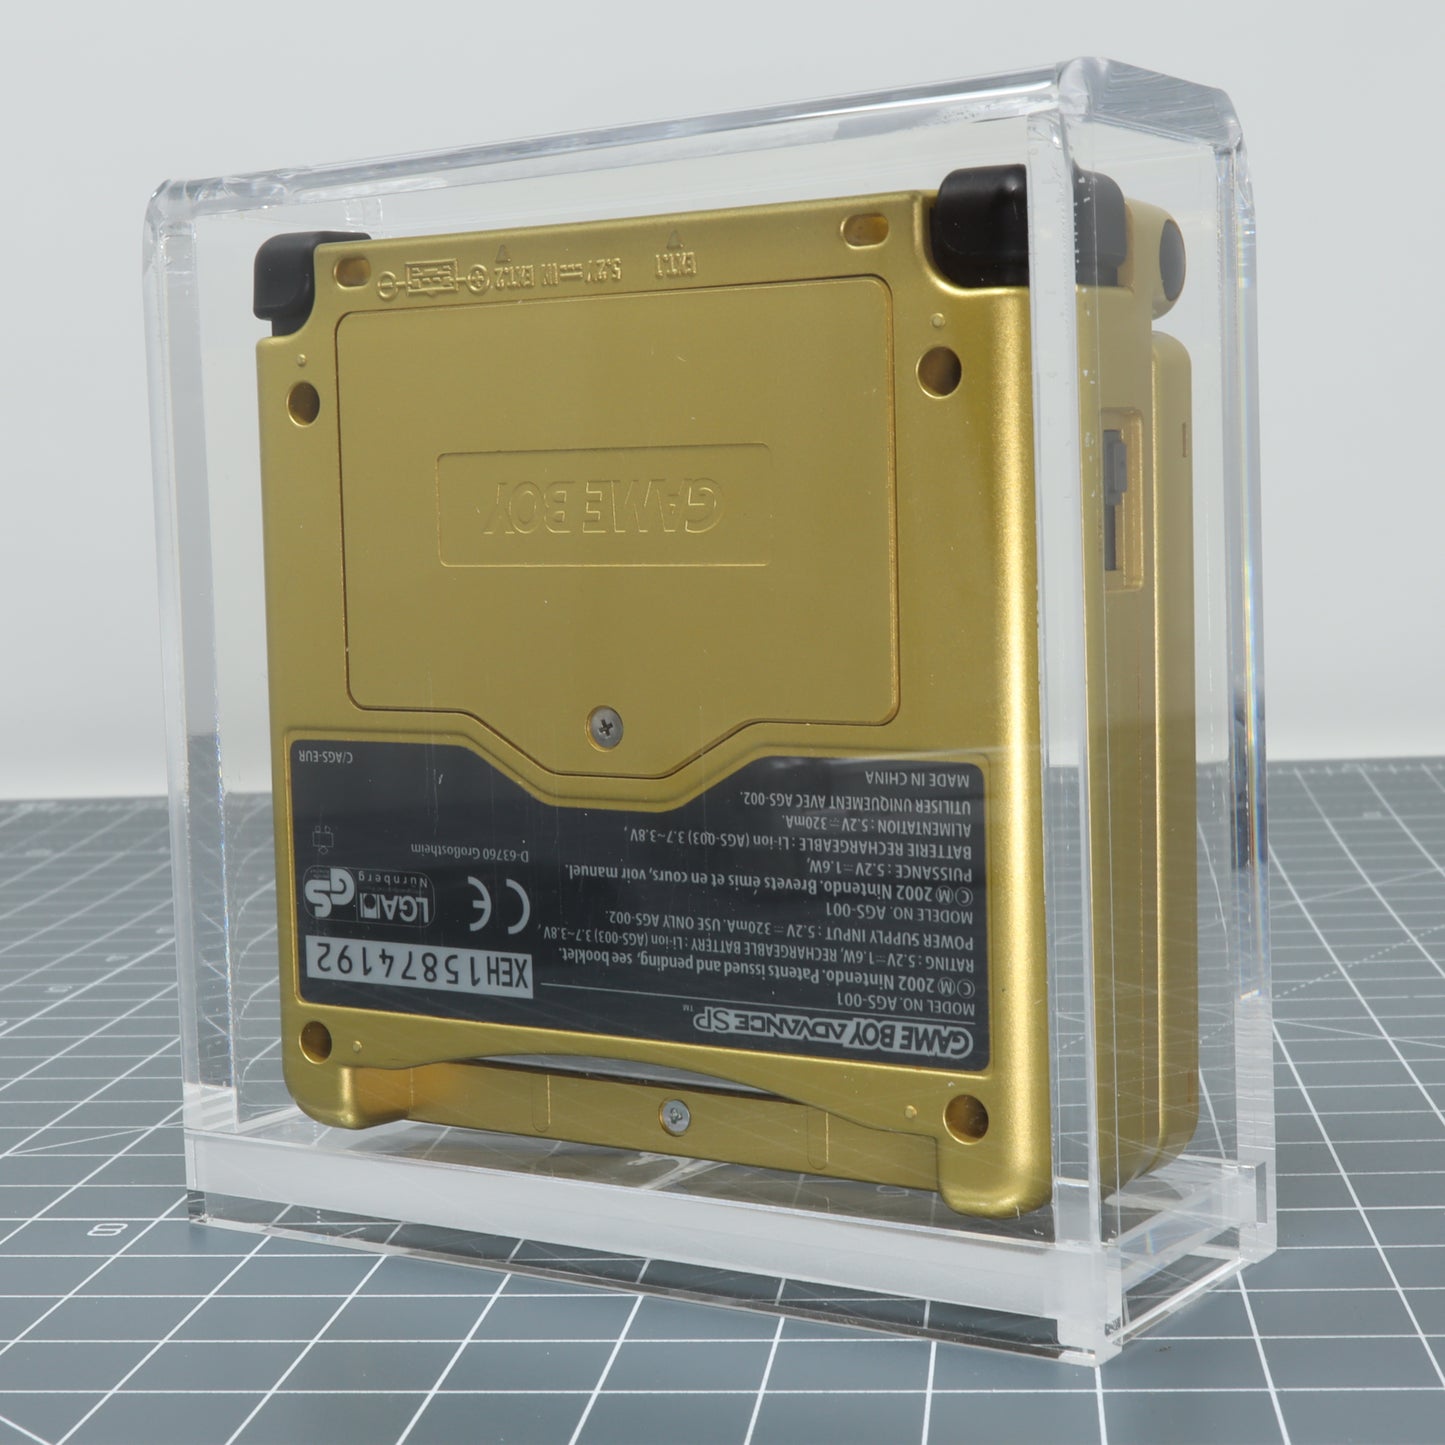 Game Boy Advance SP - Display Capsule